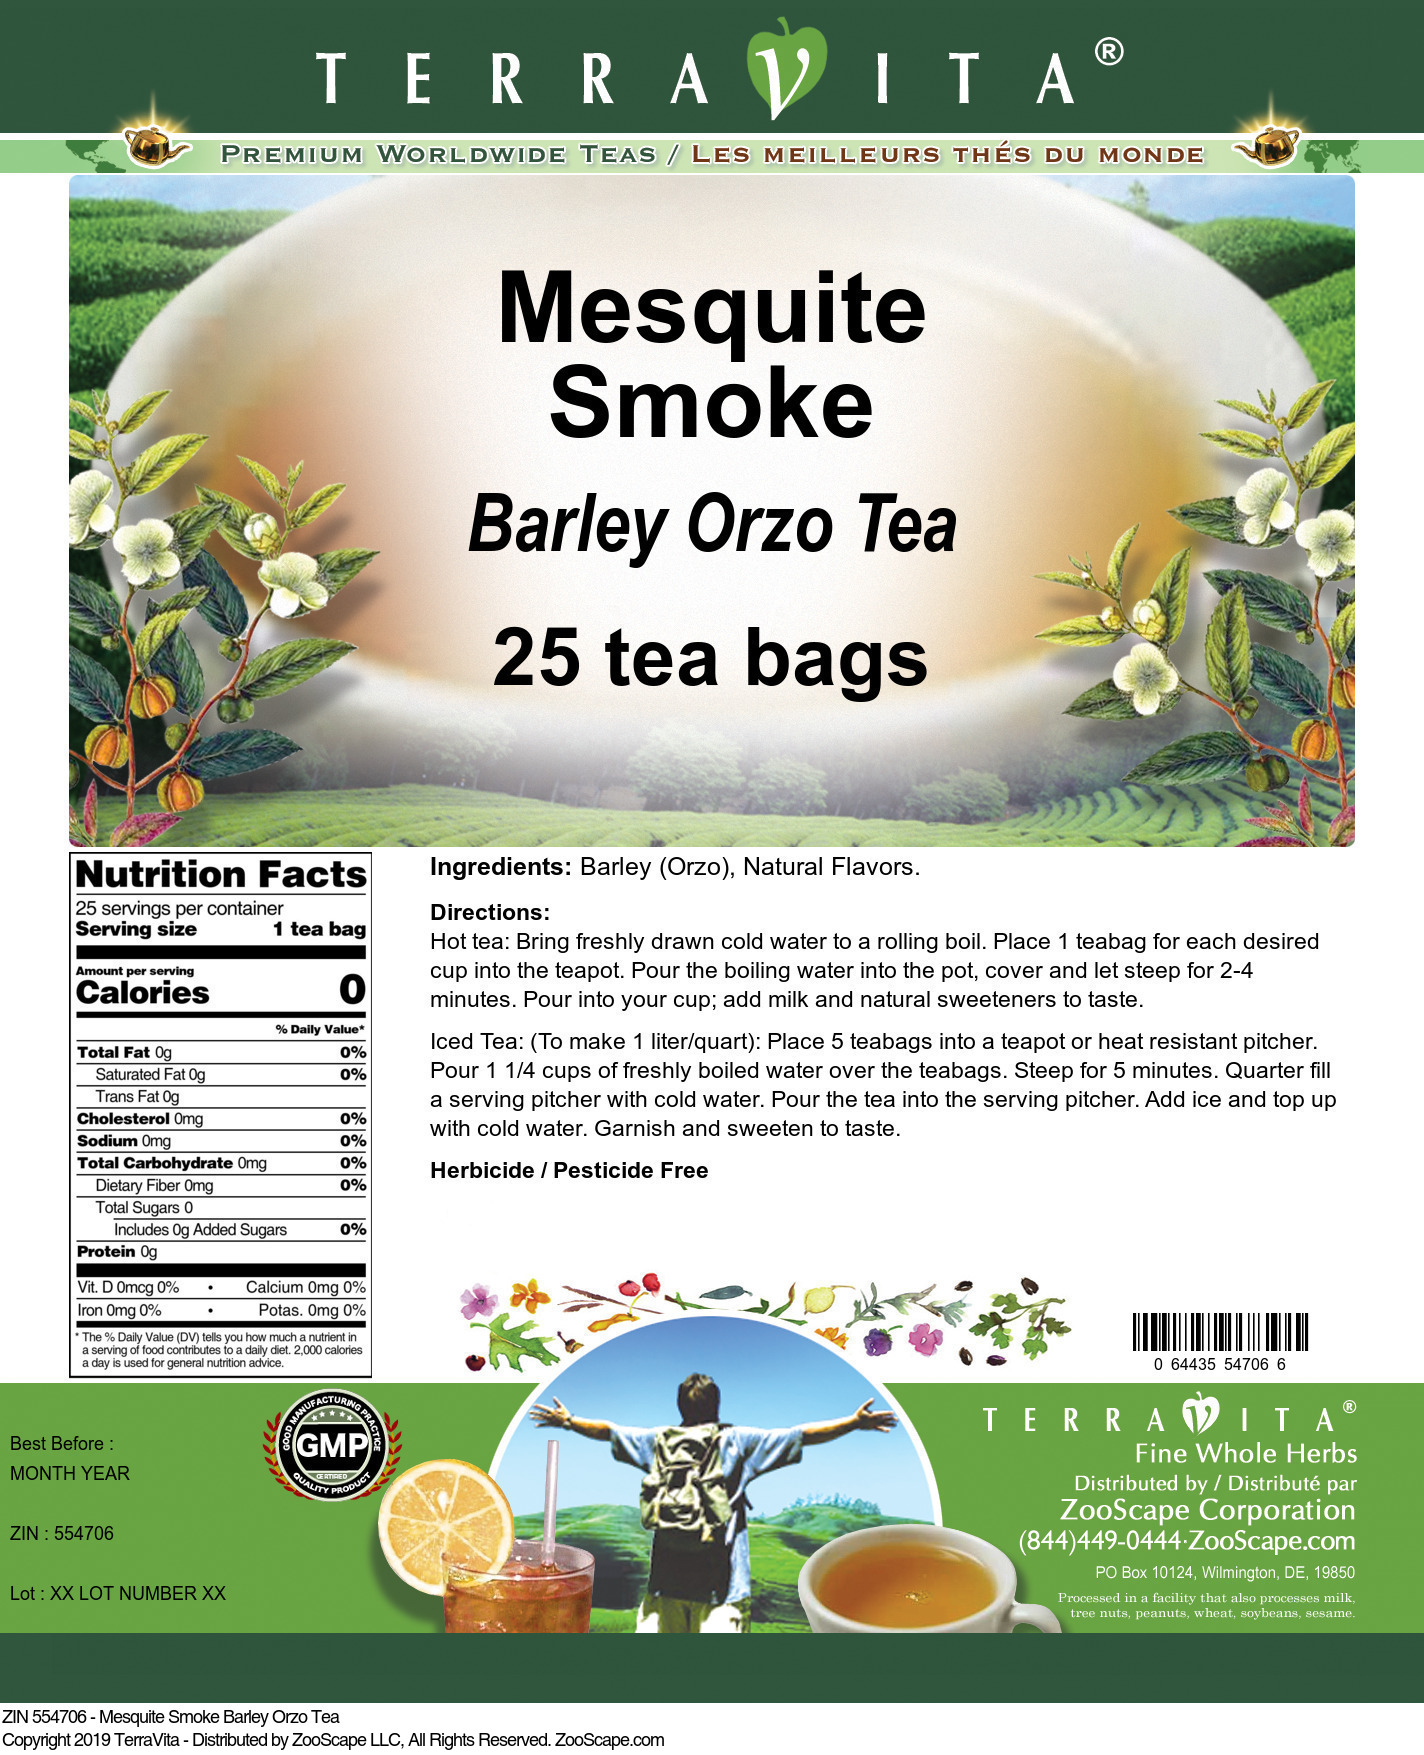 Mesquite Smoke Barley Orzo Tea - Label